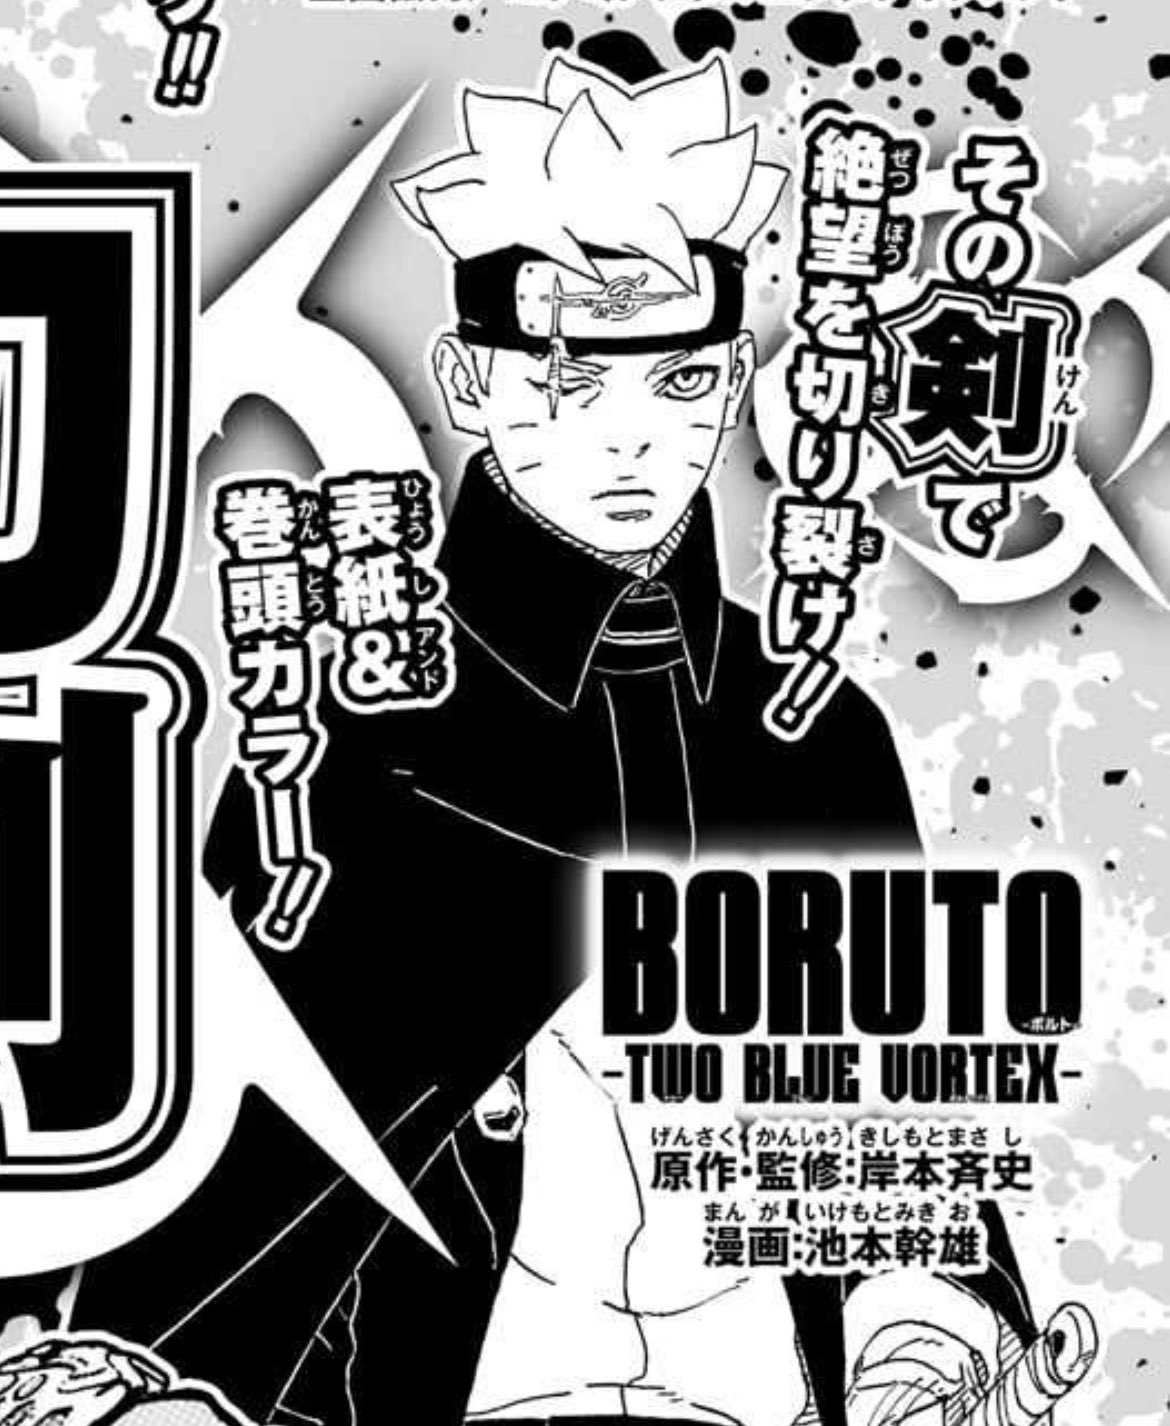 Boruto Manga Chapter 83 - Two Blue Vortex Chapter 3 - Boruto Manga